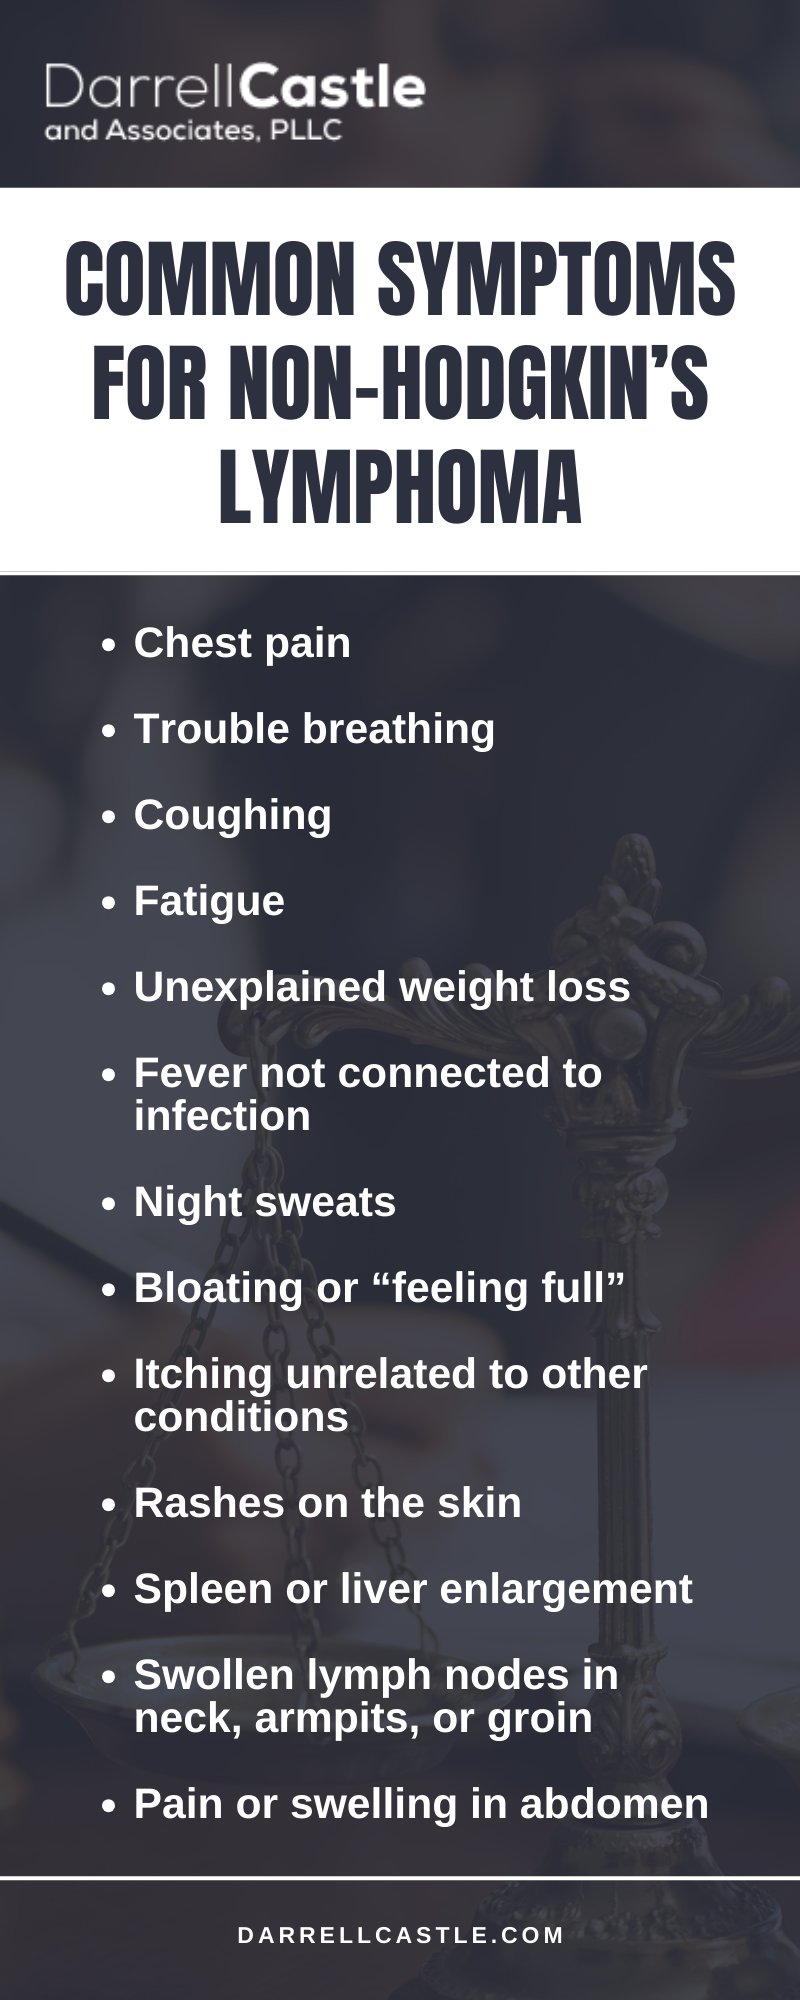 Common Symptoms For Non-Hodgkin's Lymphoma Infographic